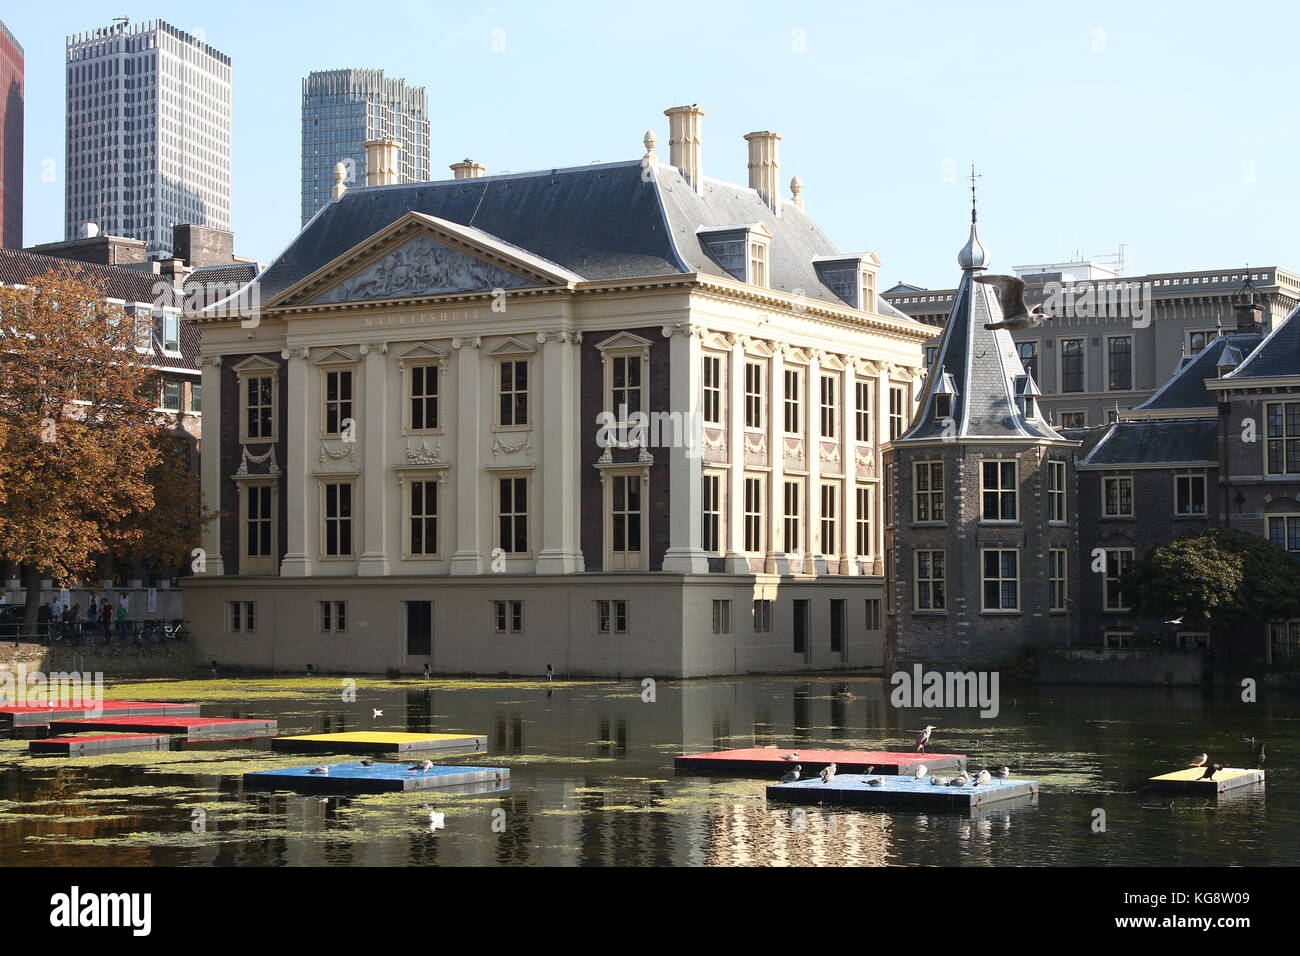 Art museum Mauritshuis, central The Hague (Den Haag), Netherlands. Hofvijver Pond. Het Torentje of Prime Minister Rutte on right  Summer 2017 Stock Photo